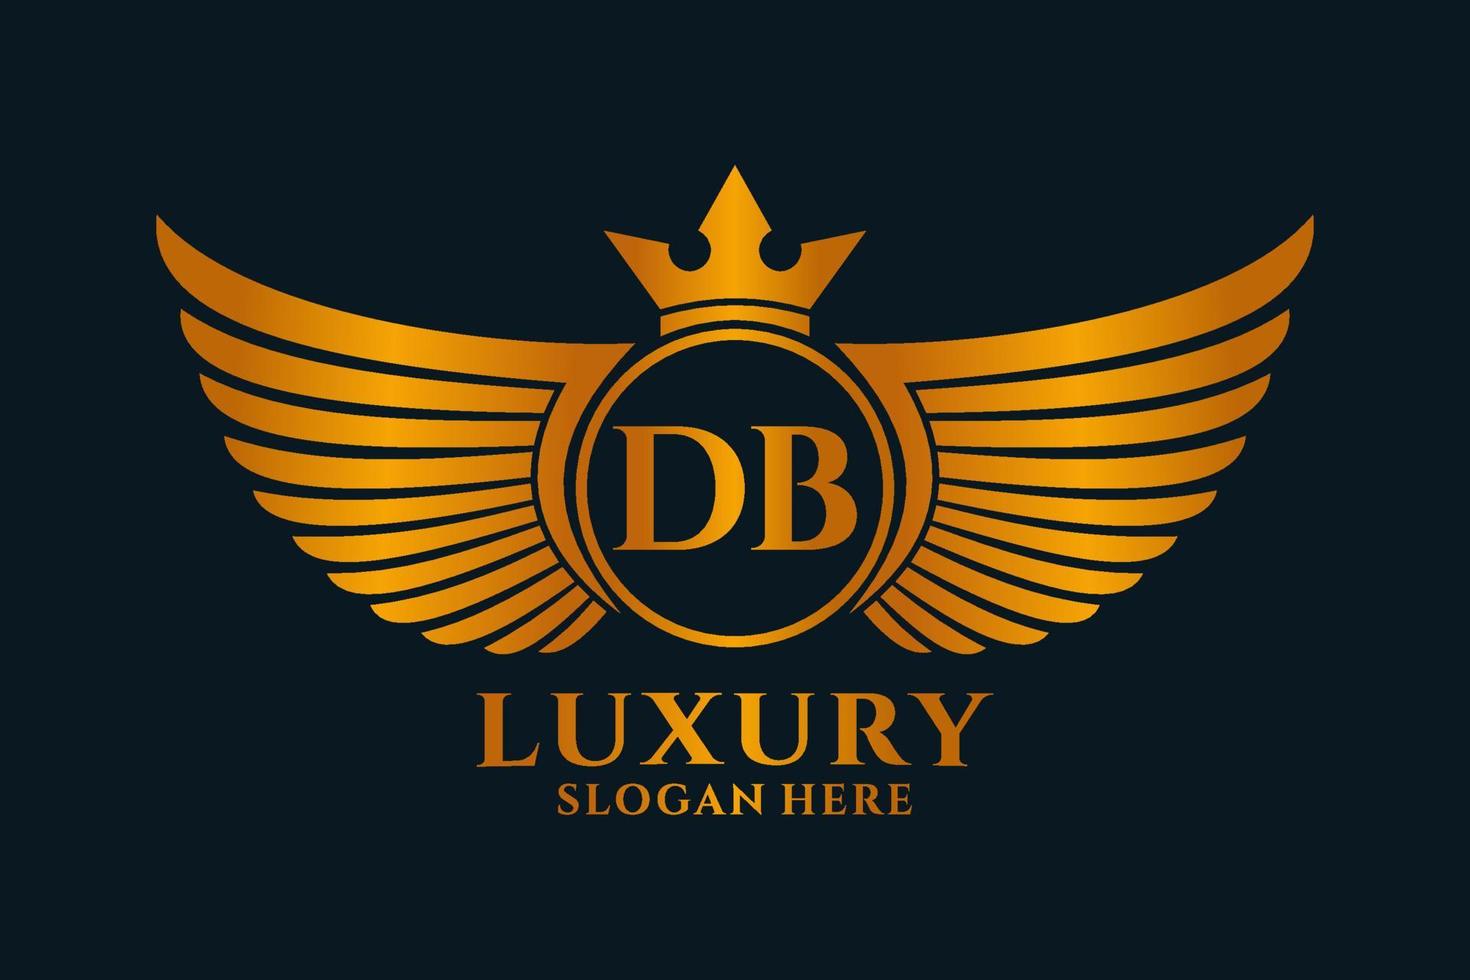 luxe Koninklijk vleugel brief db kam goud kleur logo vector, zege logo, kam logo, vleugel logo, vector logo sjabloon.